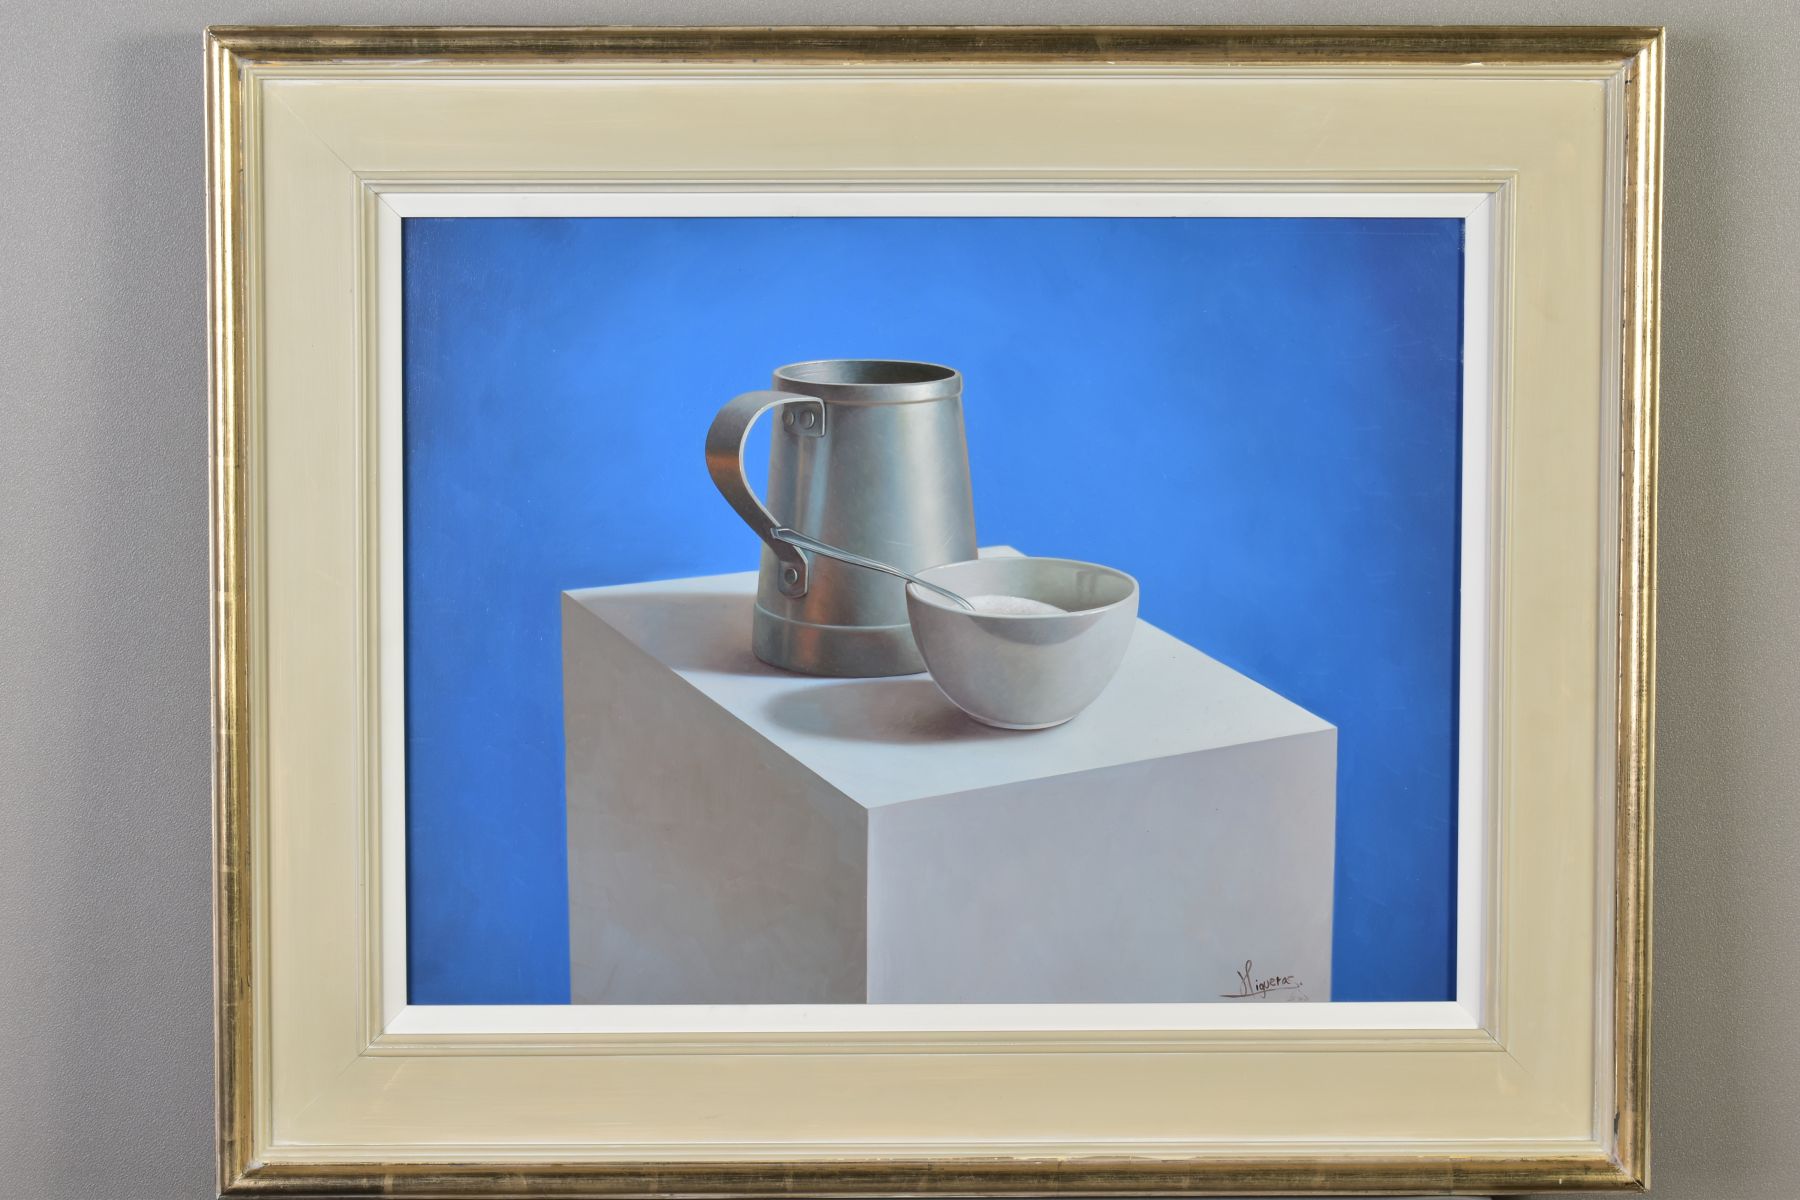 JUAN HIGUERAS (SPANISH 1963) 'STILL LIFE I', a study of a pewter mug and bowl of sugar, signed